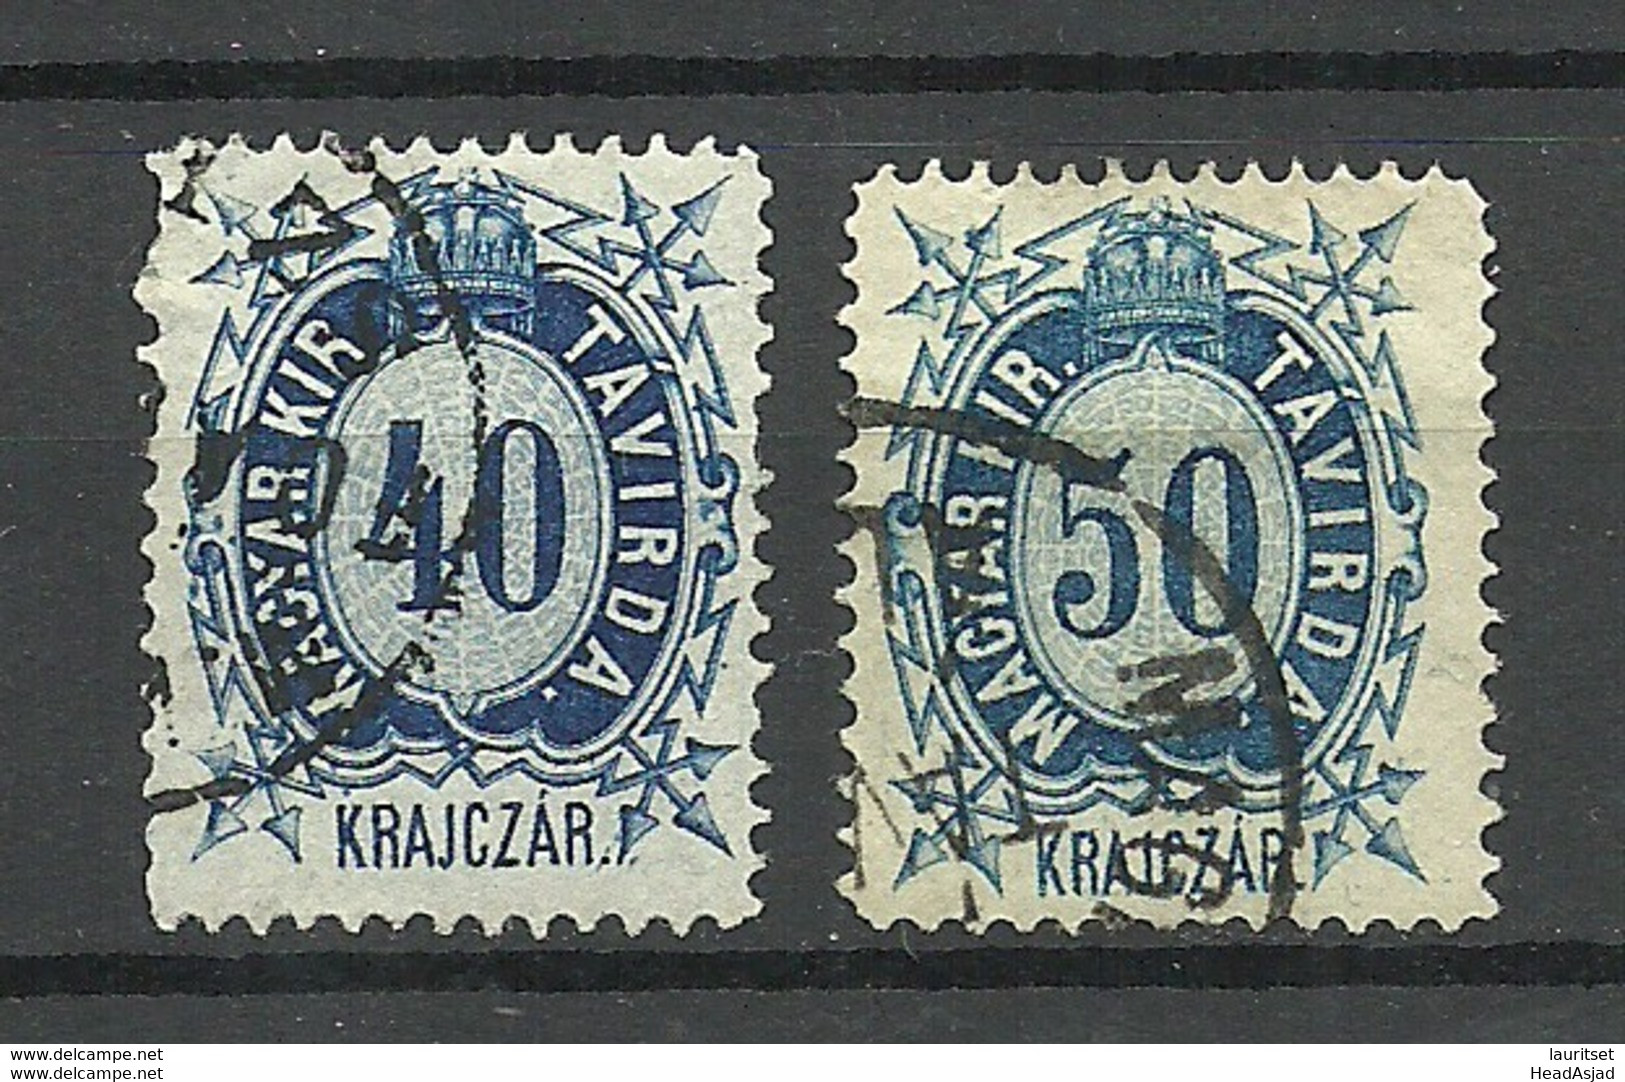 UNGARN HUNGARY 1874 Telegraphmarke Michel 15 - 16 O - Telegraphenmarken